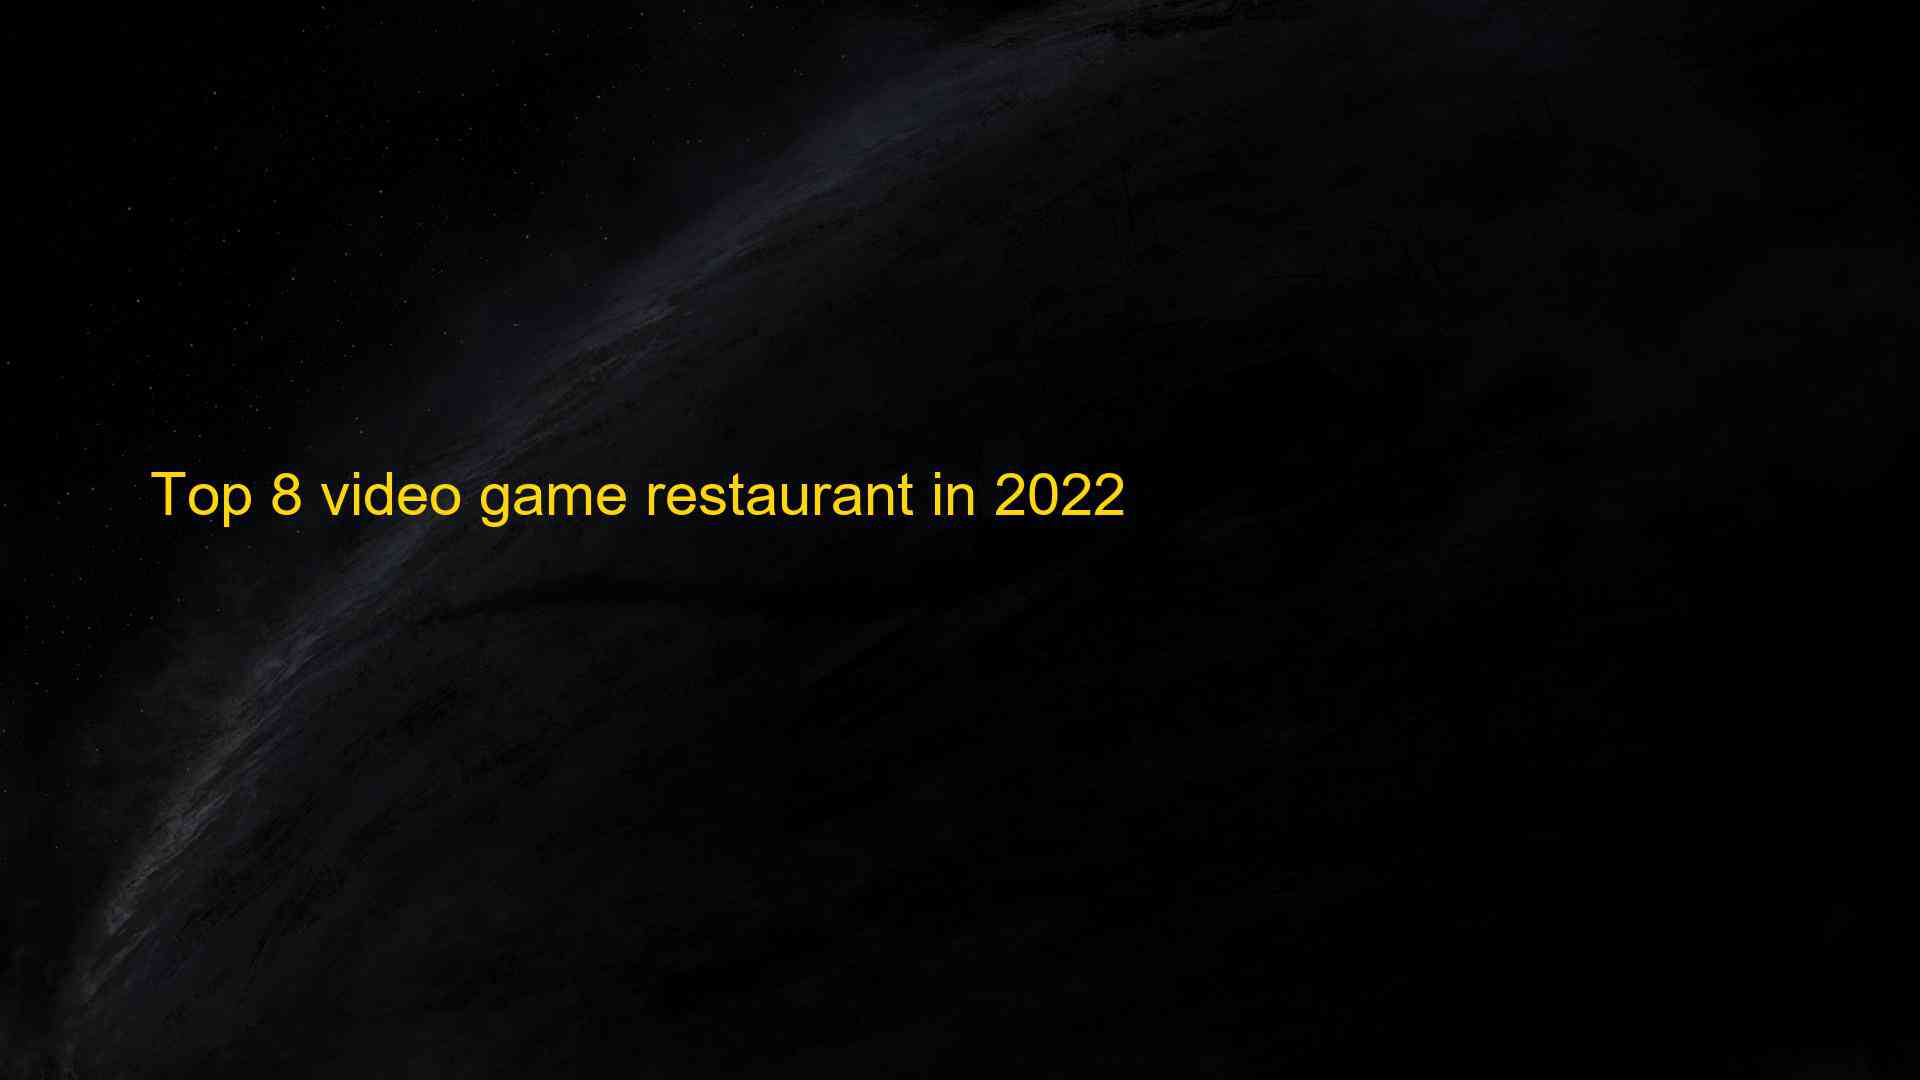 Top 8 video game restaurant in 2022 1663512718